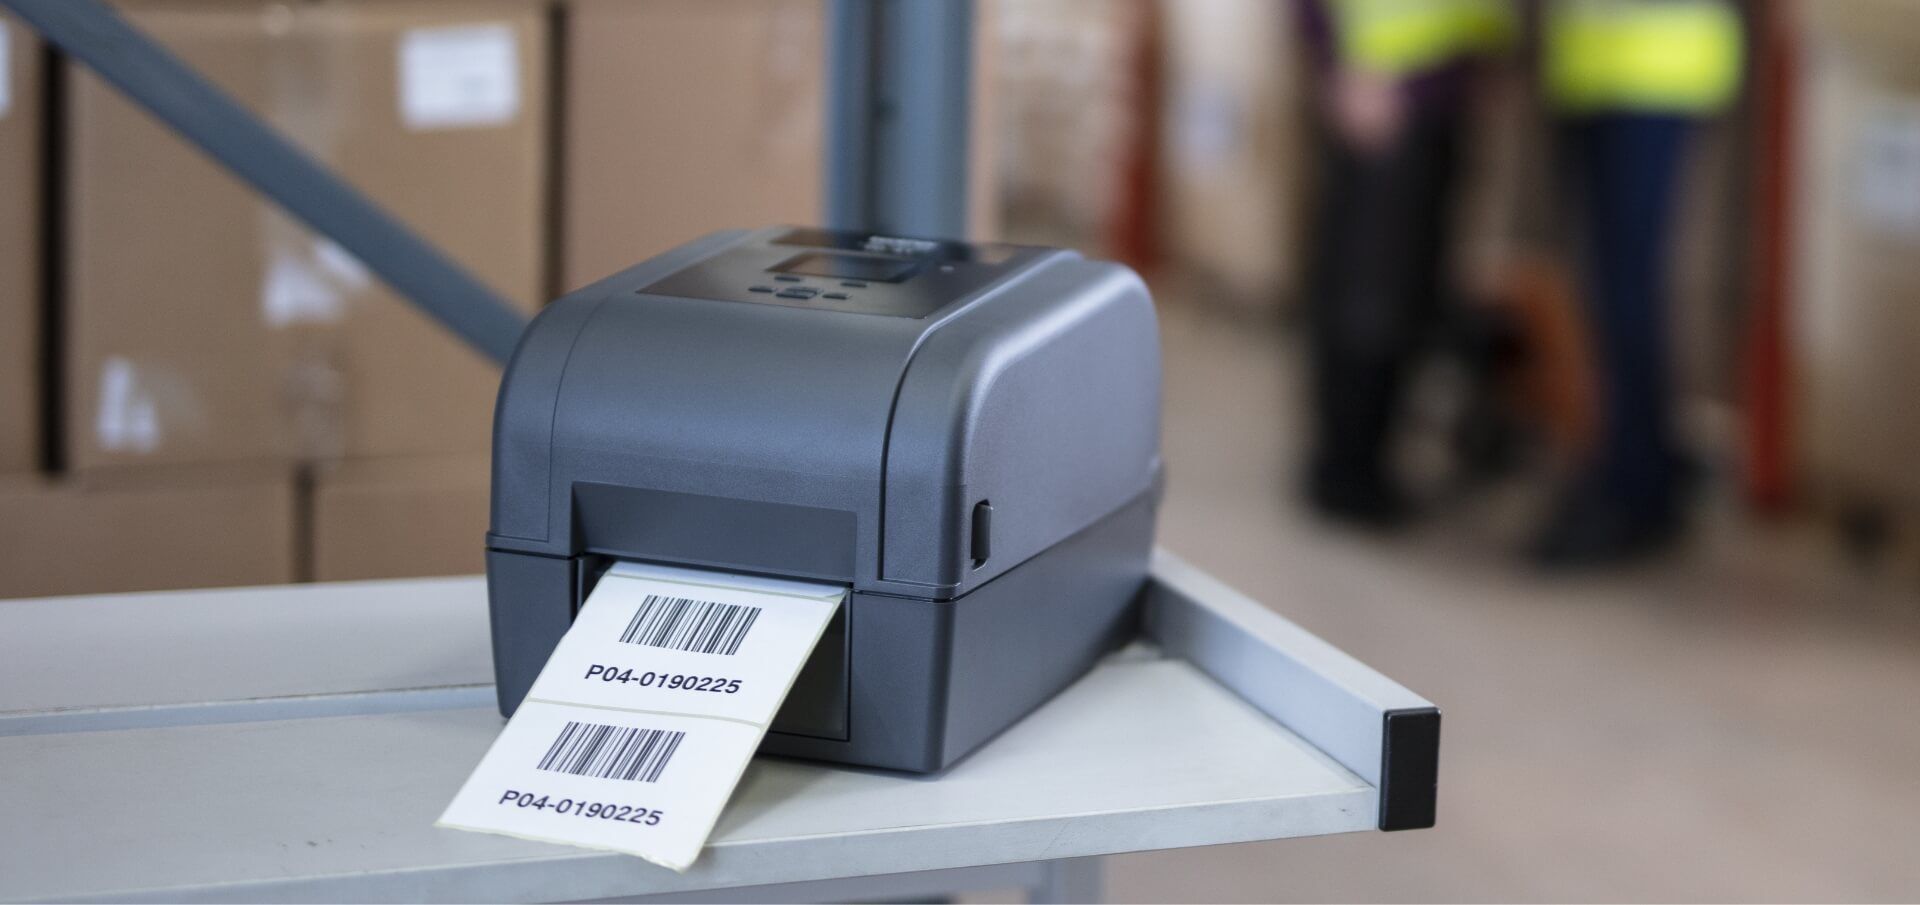 TD 4 Printer Sitting on Warehouse Shelf Printing Labels